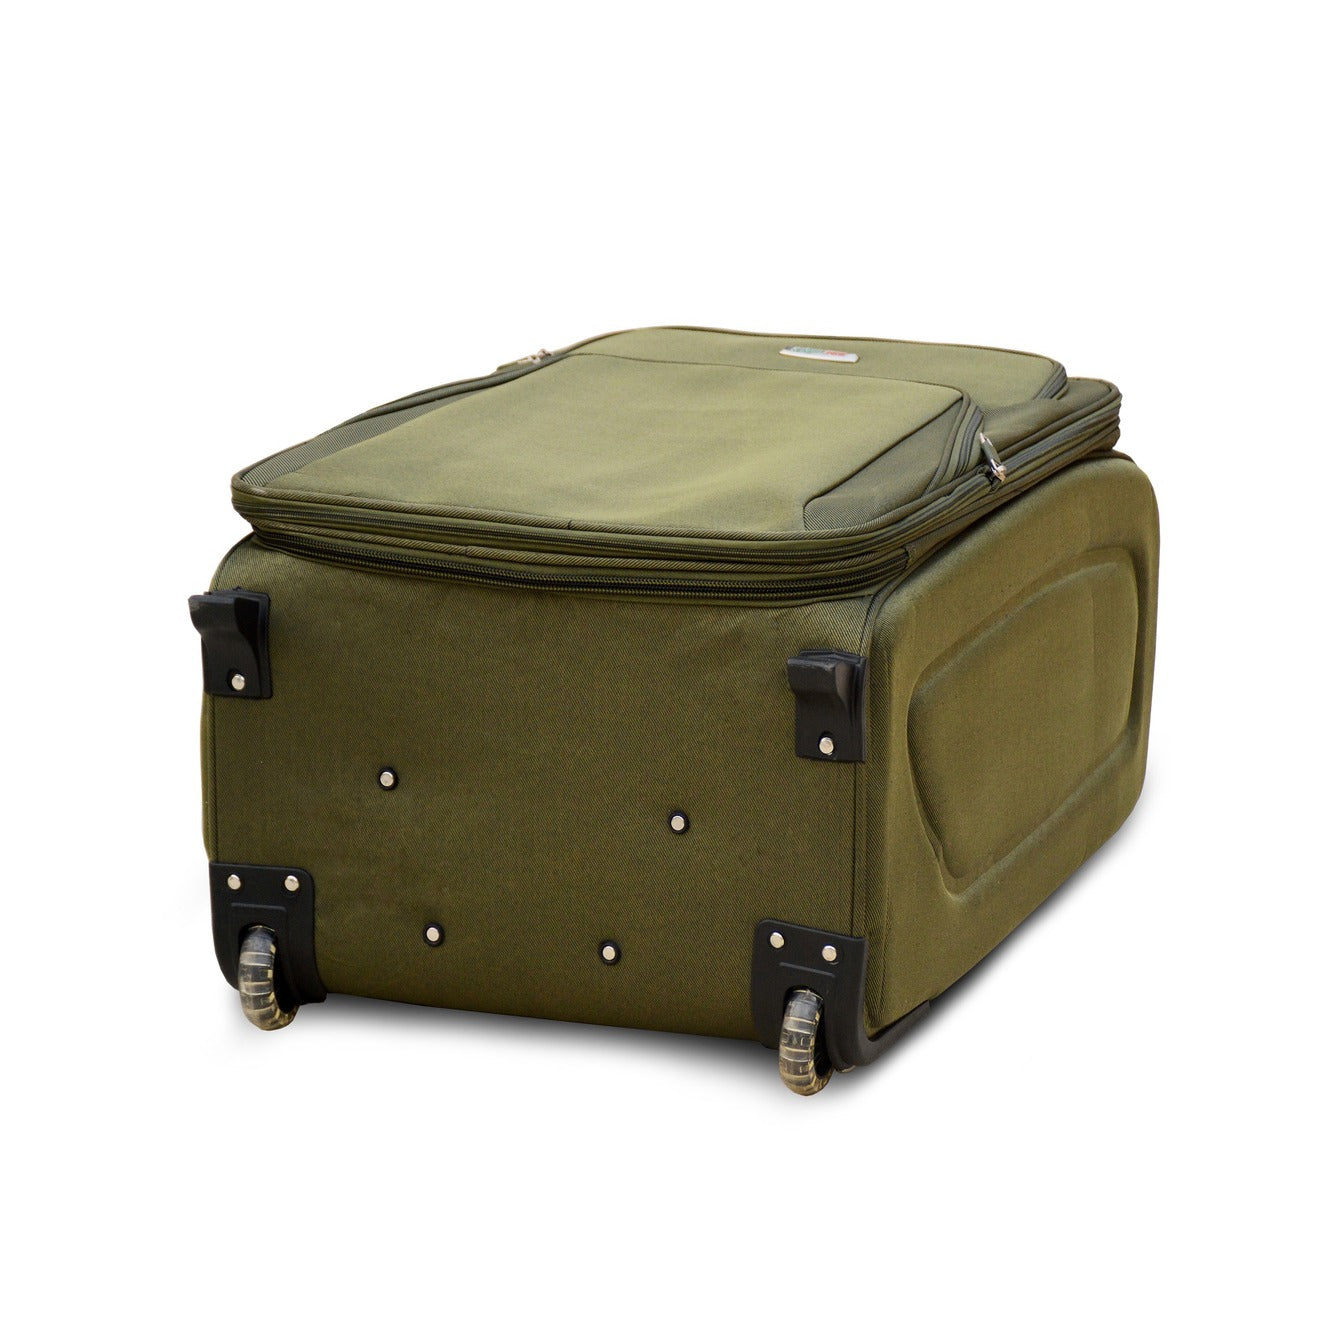 24" Light Green Colour SJ JIAN 2 Wheel Luggage Lightweight Soft Material Trolley Bag